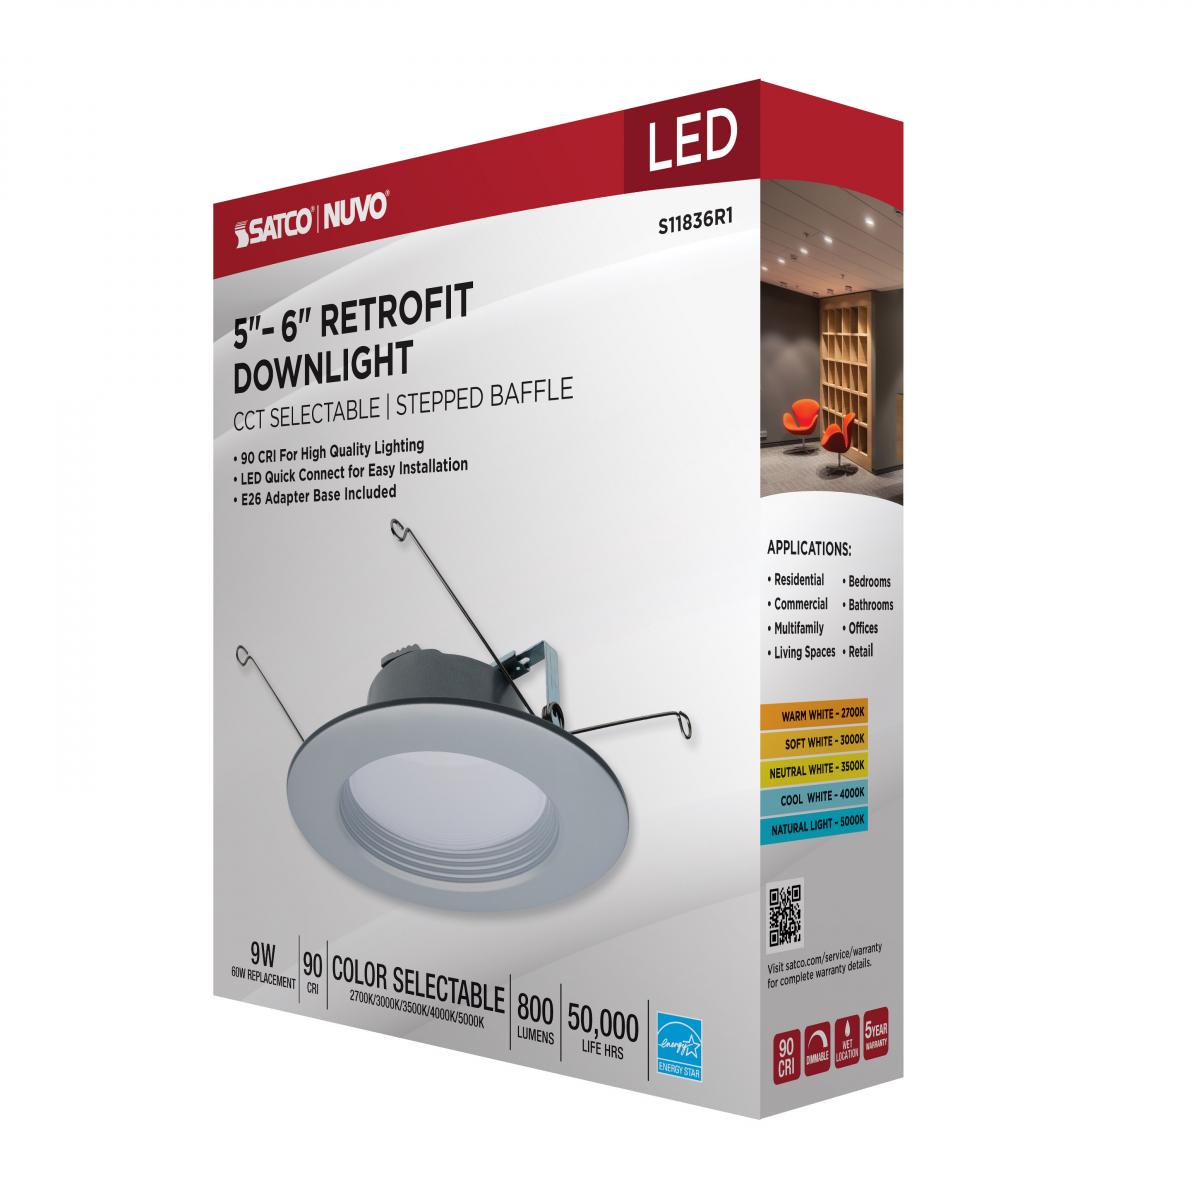 6 Inch Round LED Downlight Retrofit, 9 Watt, 800 Lumens, Selectable CCT, 2700K to 5000K, Baffle Trim, Brushed Nickel Finish